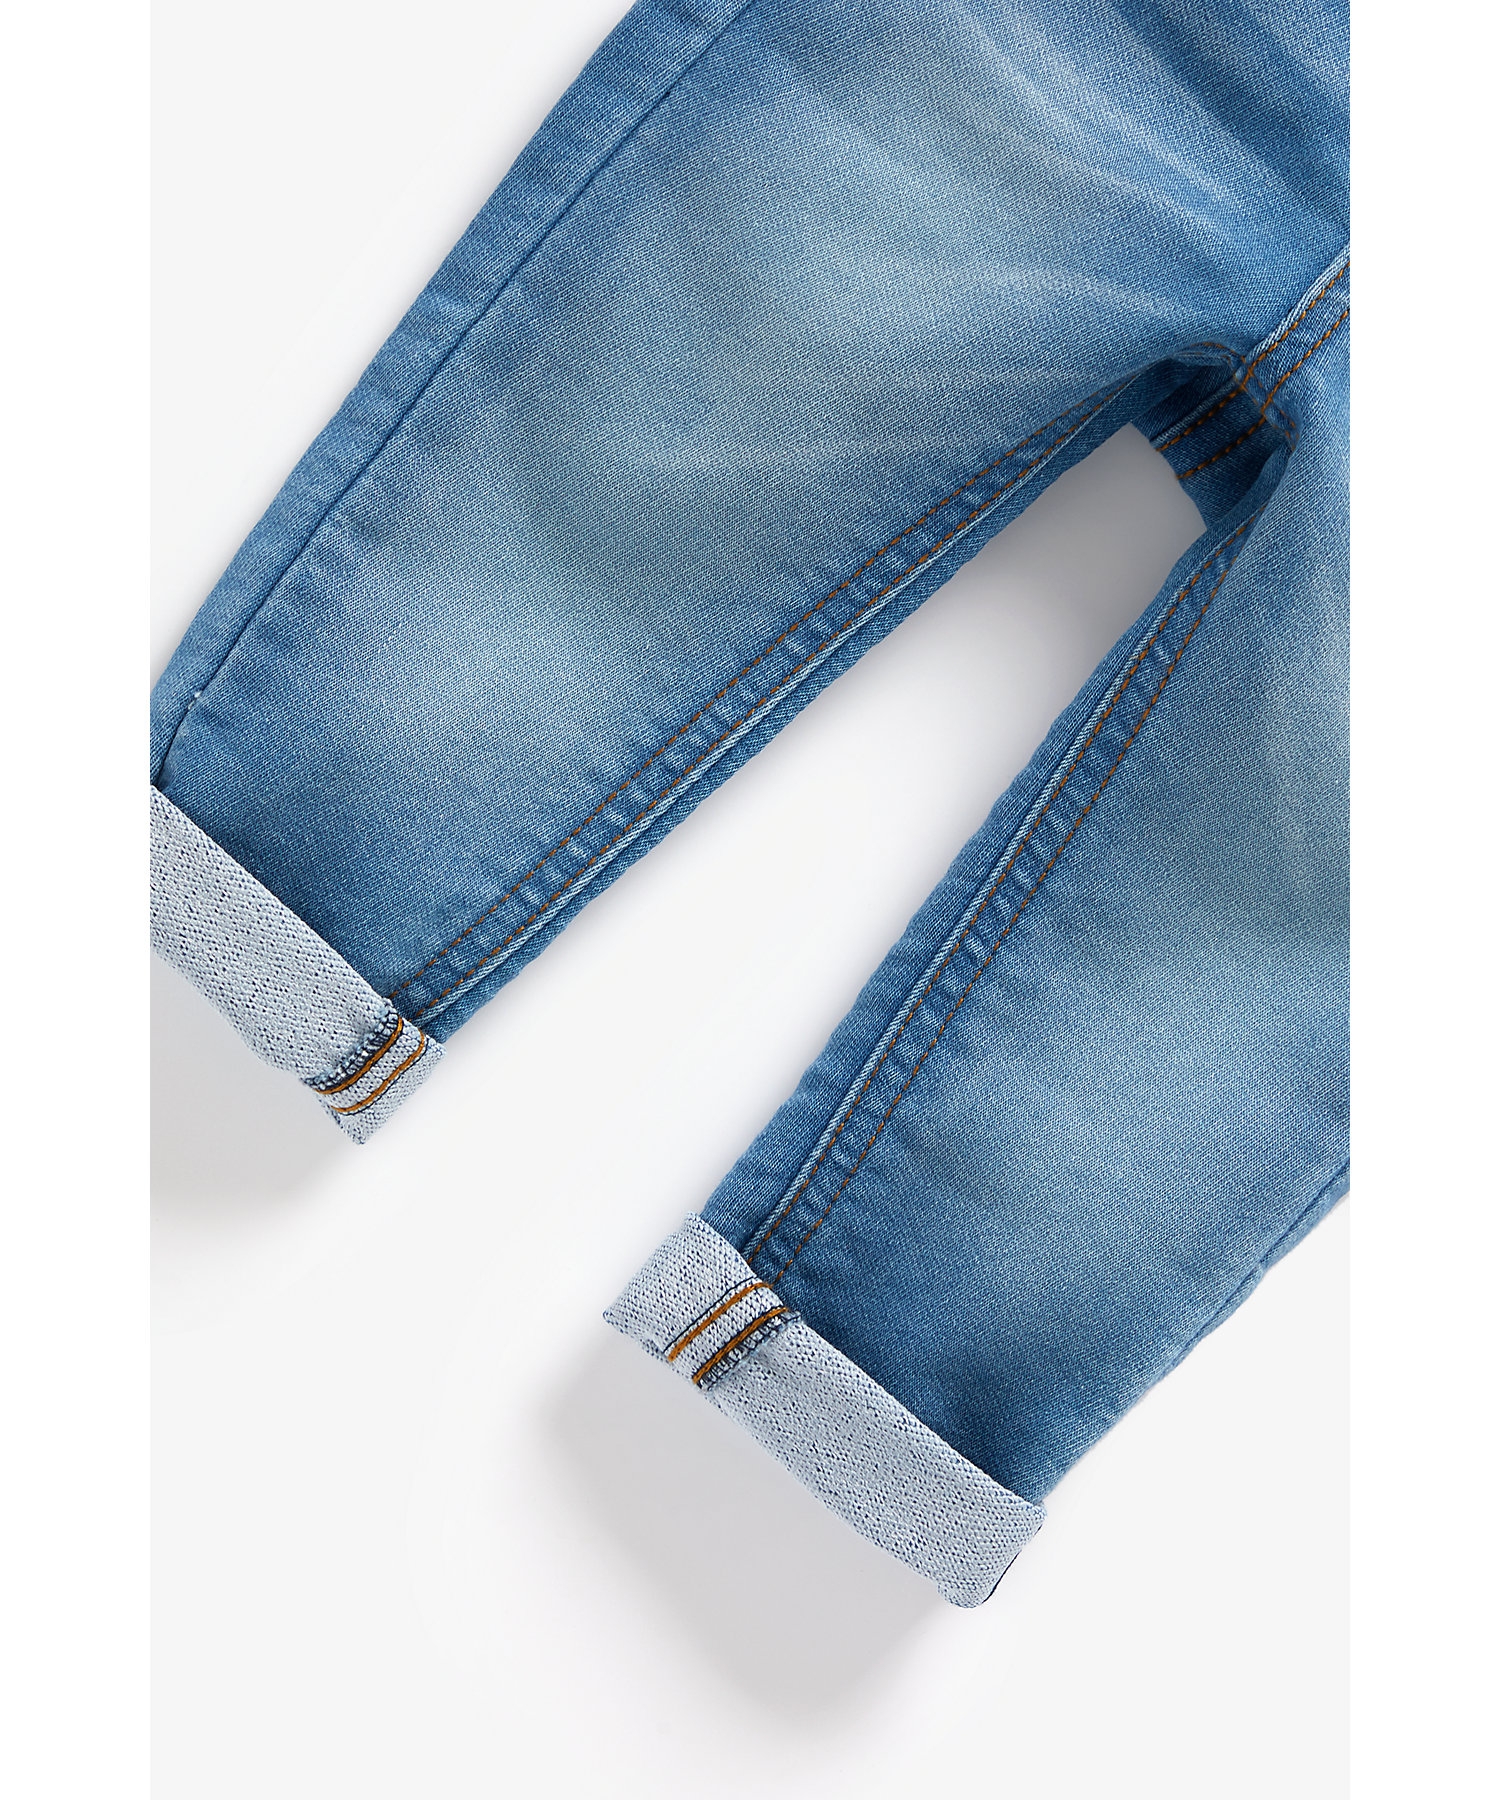 Boys 5 Pocket Jeans -Blue